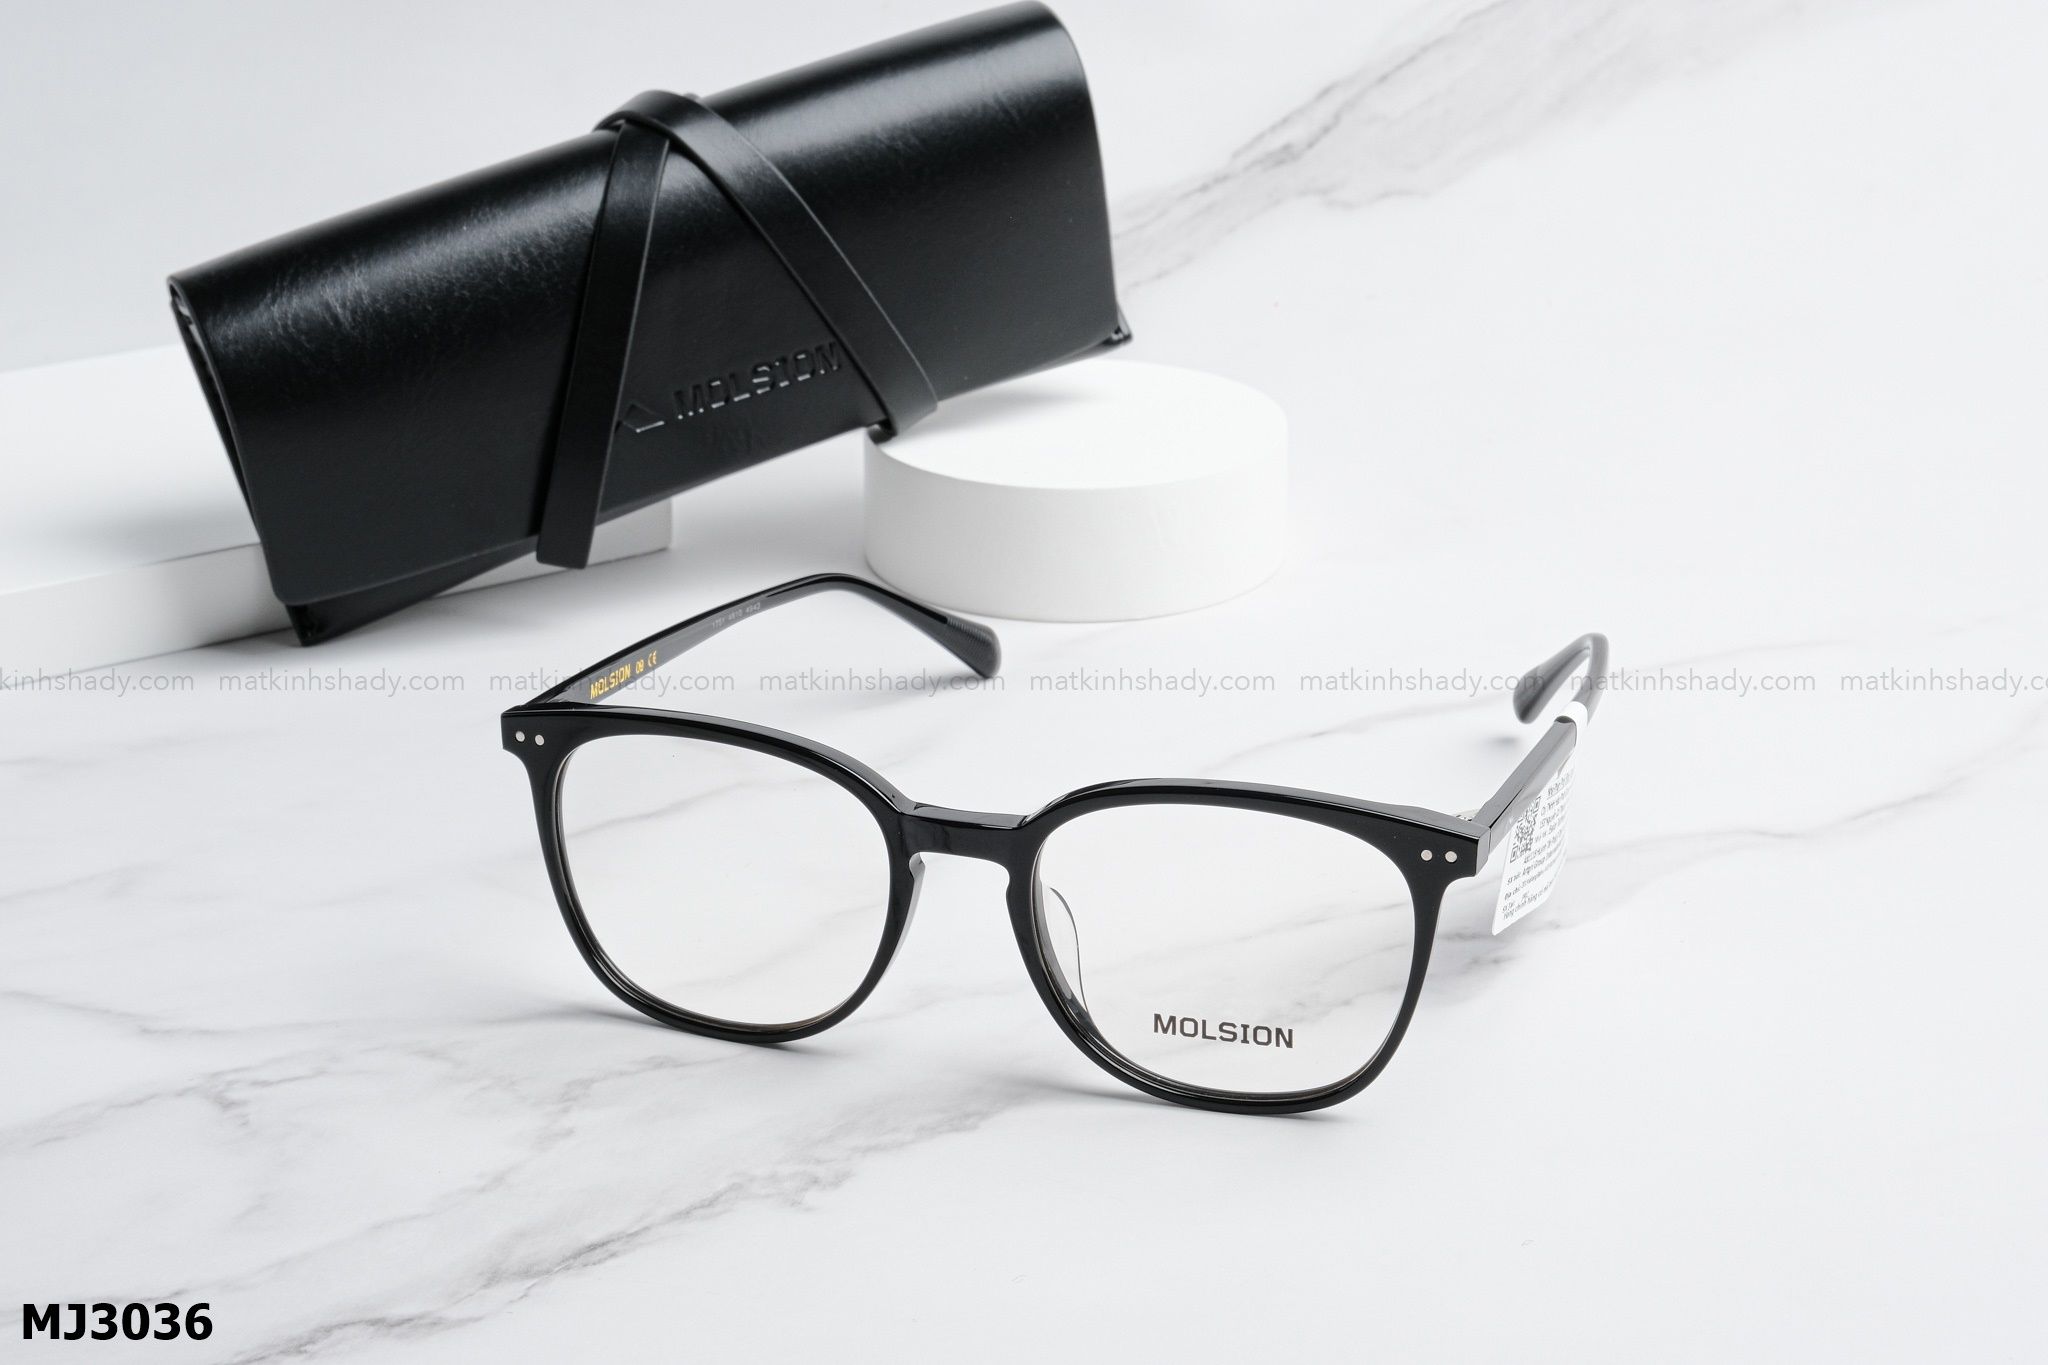  Molsion Eyewear - Glasses - MJ3036 